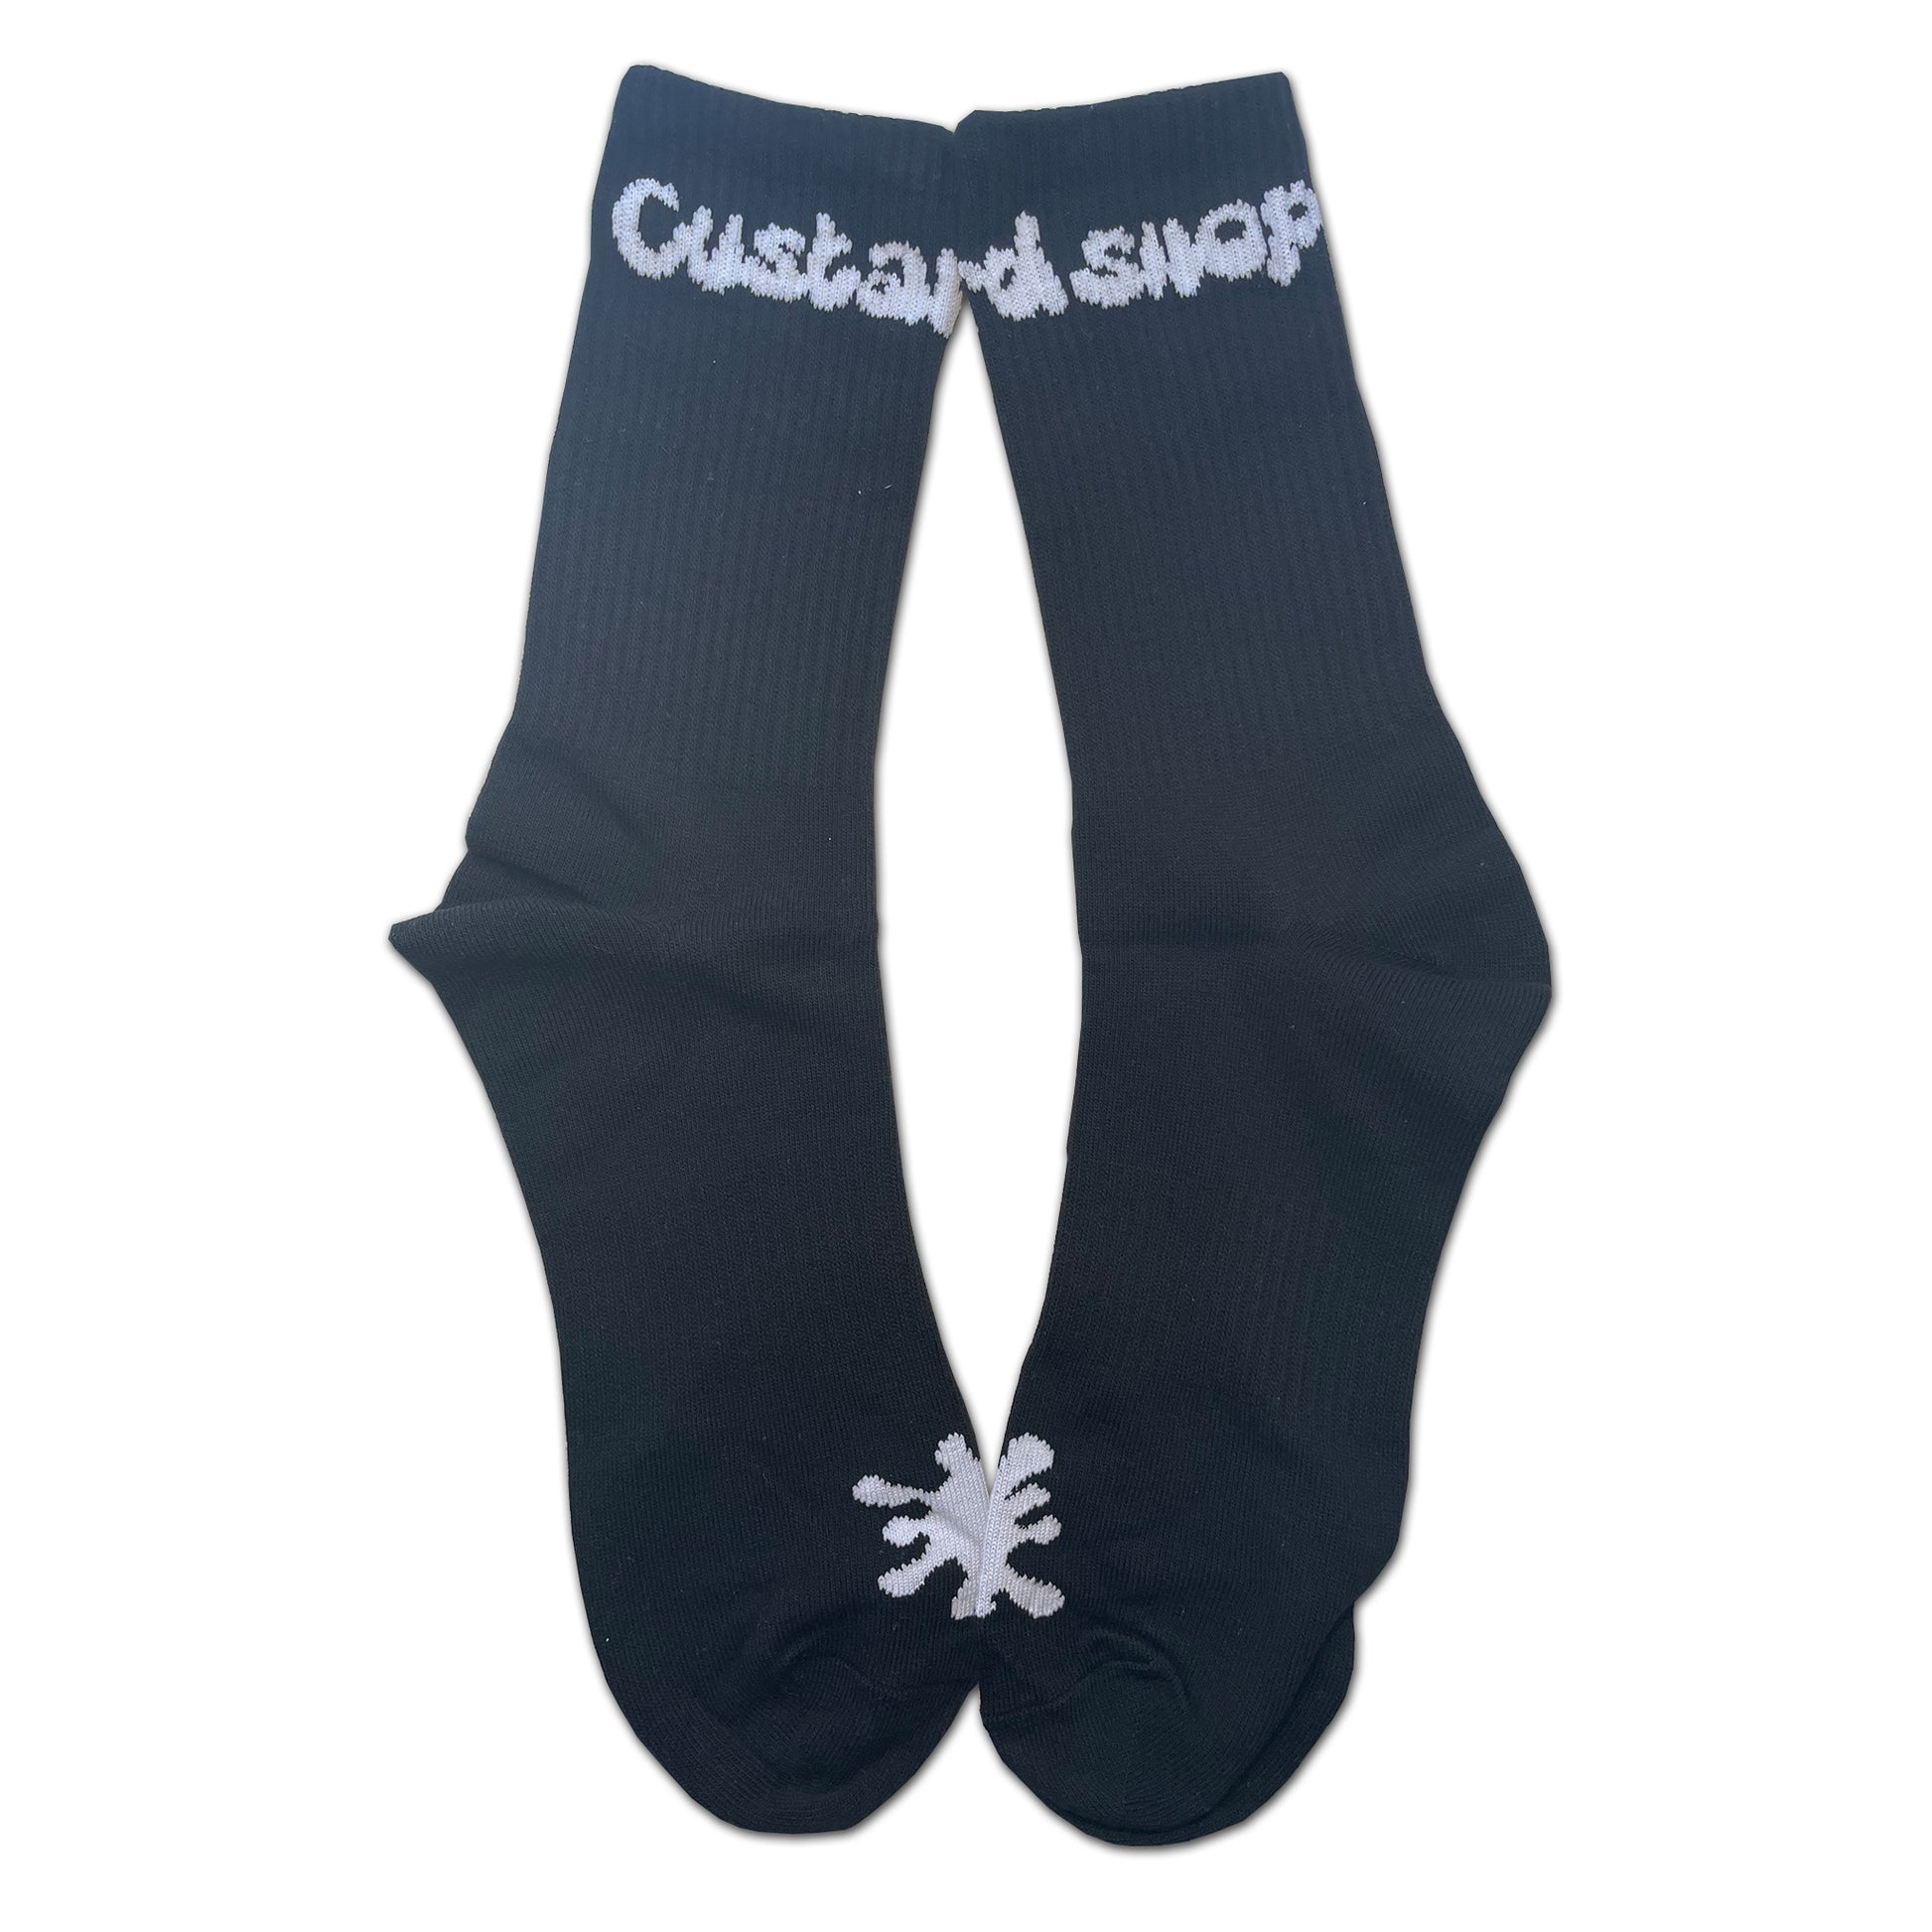 Custard Shop Splodge Socks | Black Custard Shop Official